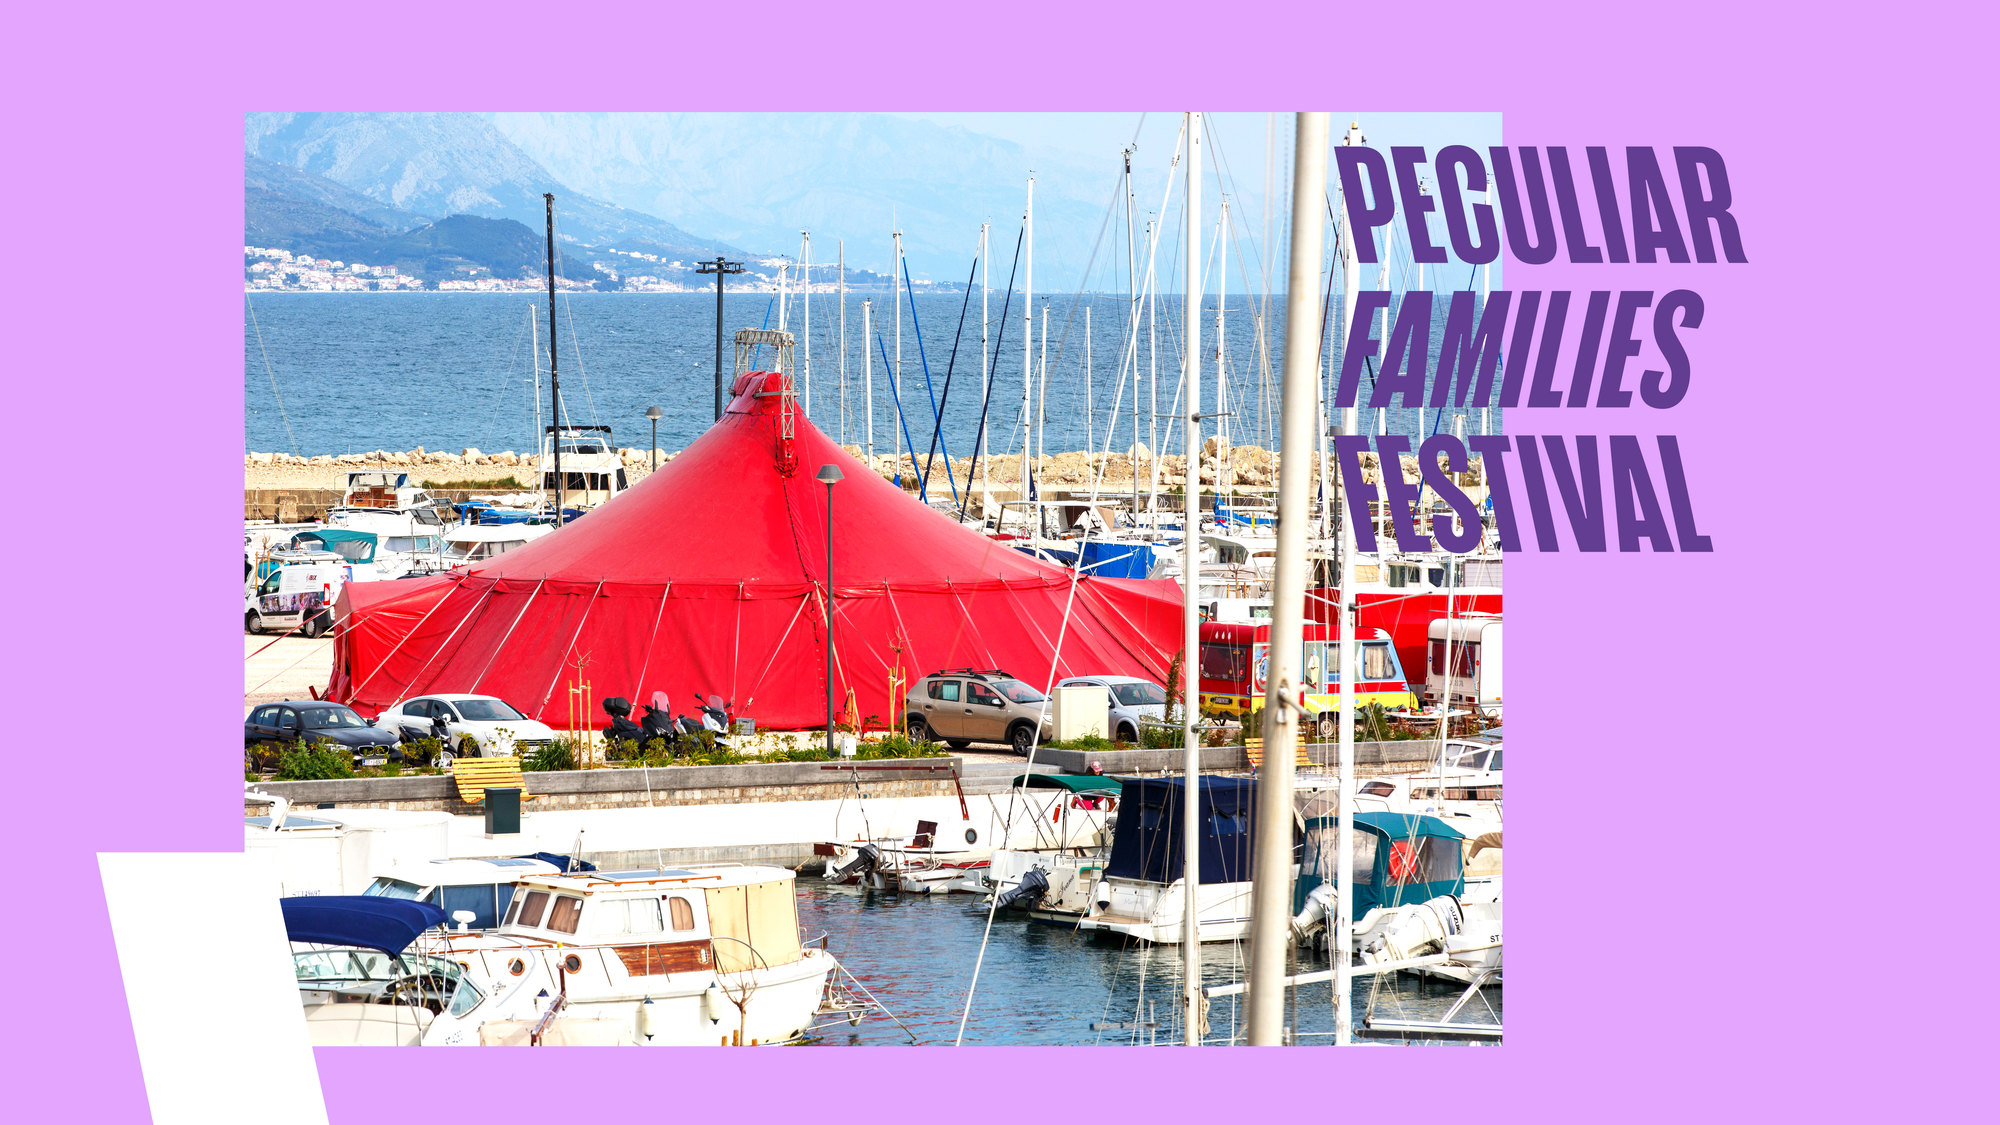 Peculiar Families Festival and Circostrada General Meeting